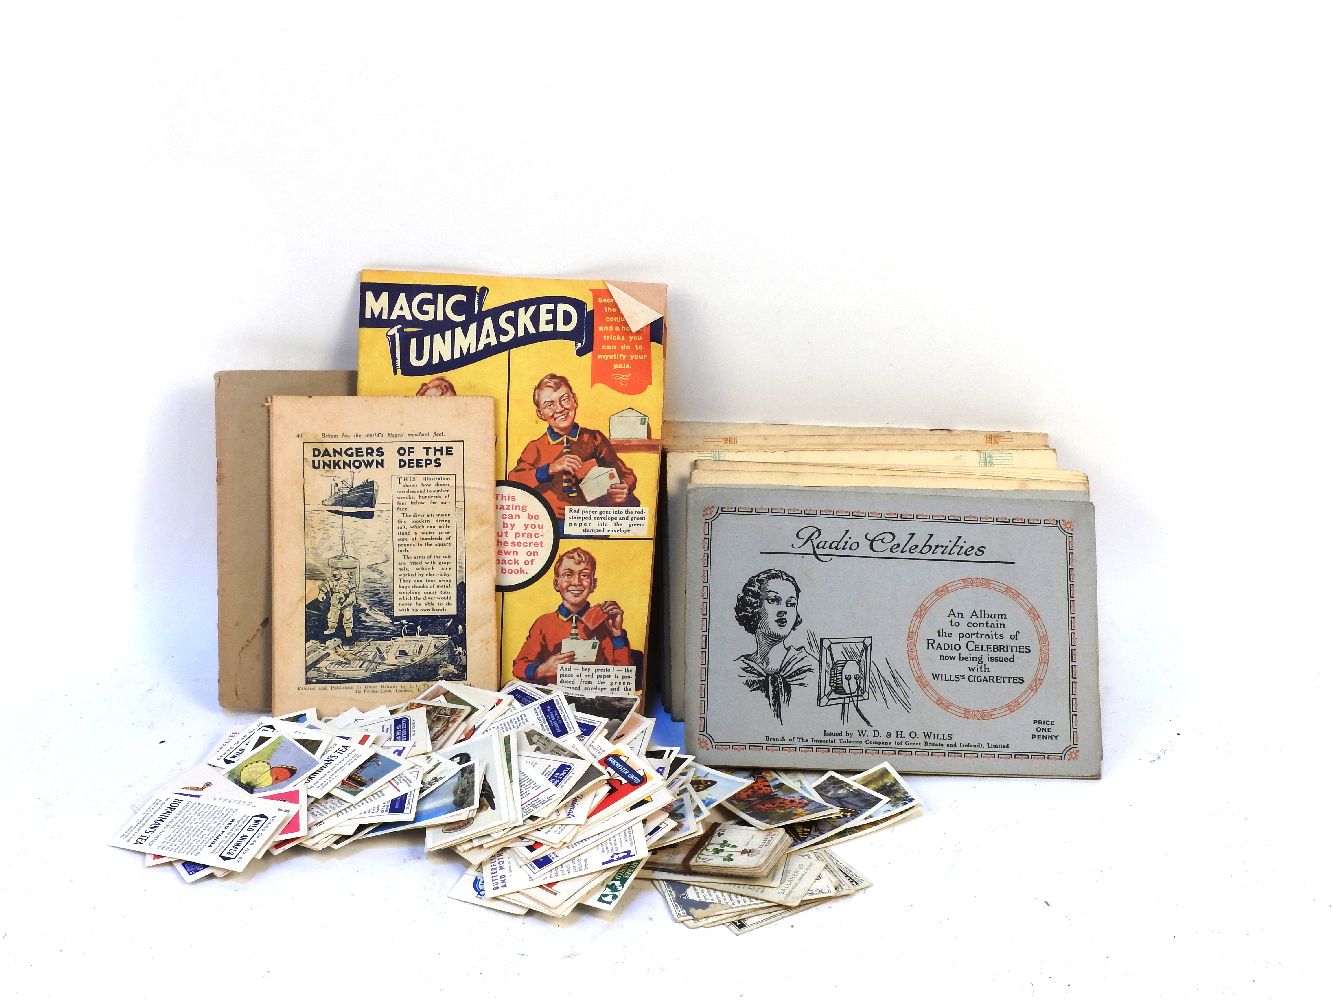 Cigarette and tea cards